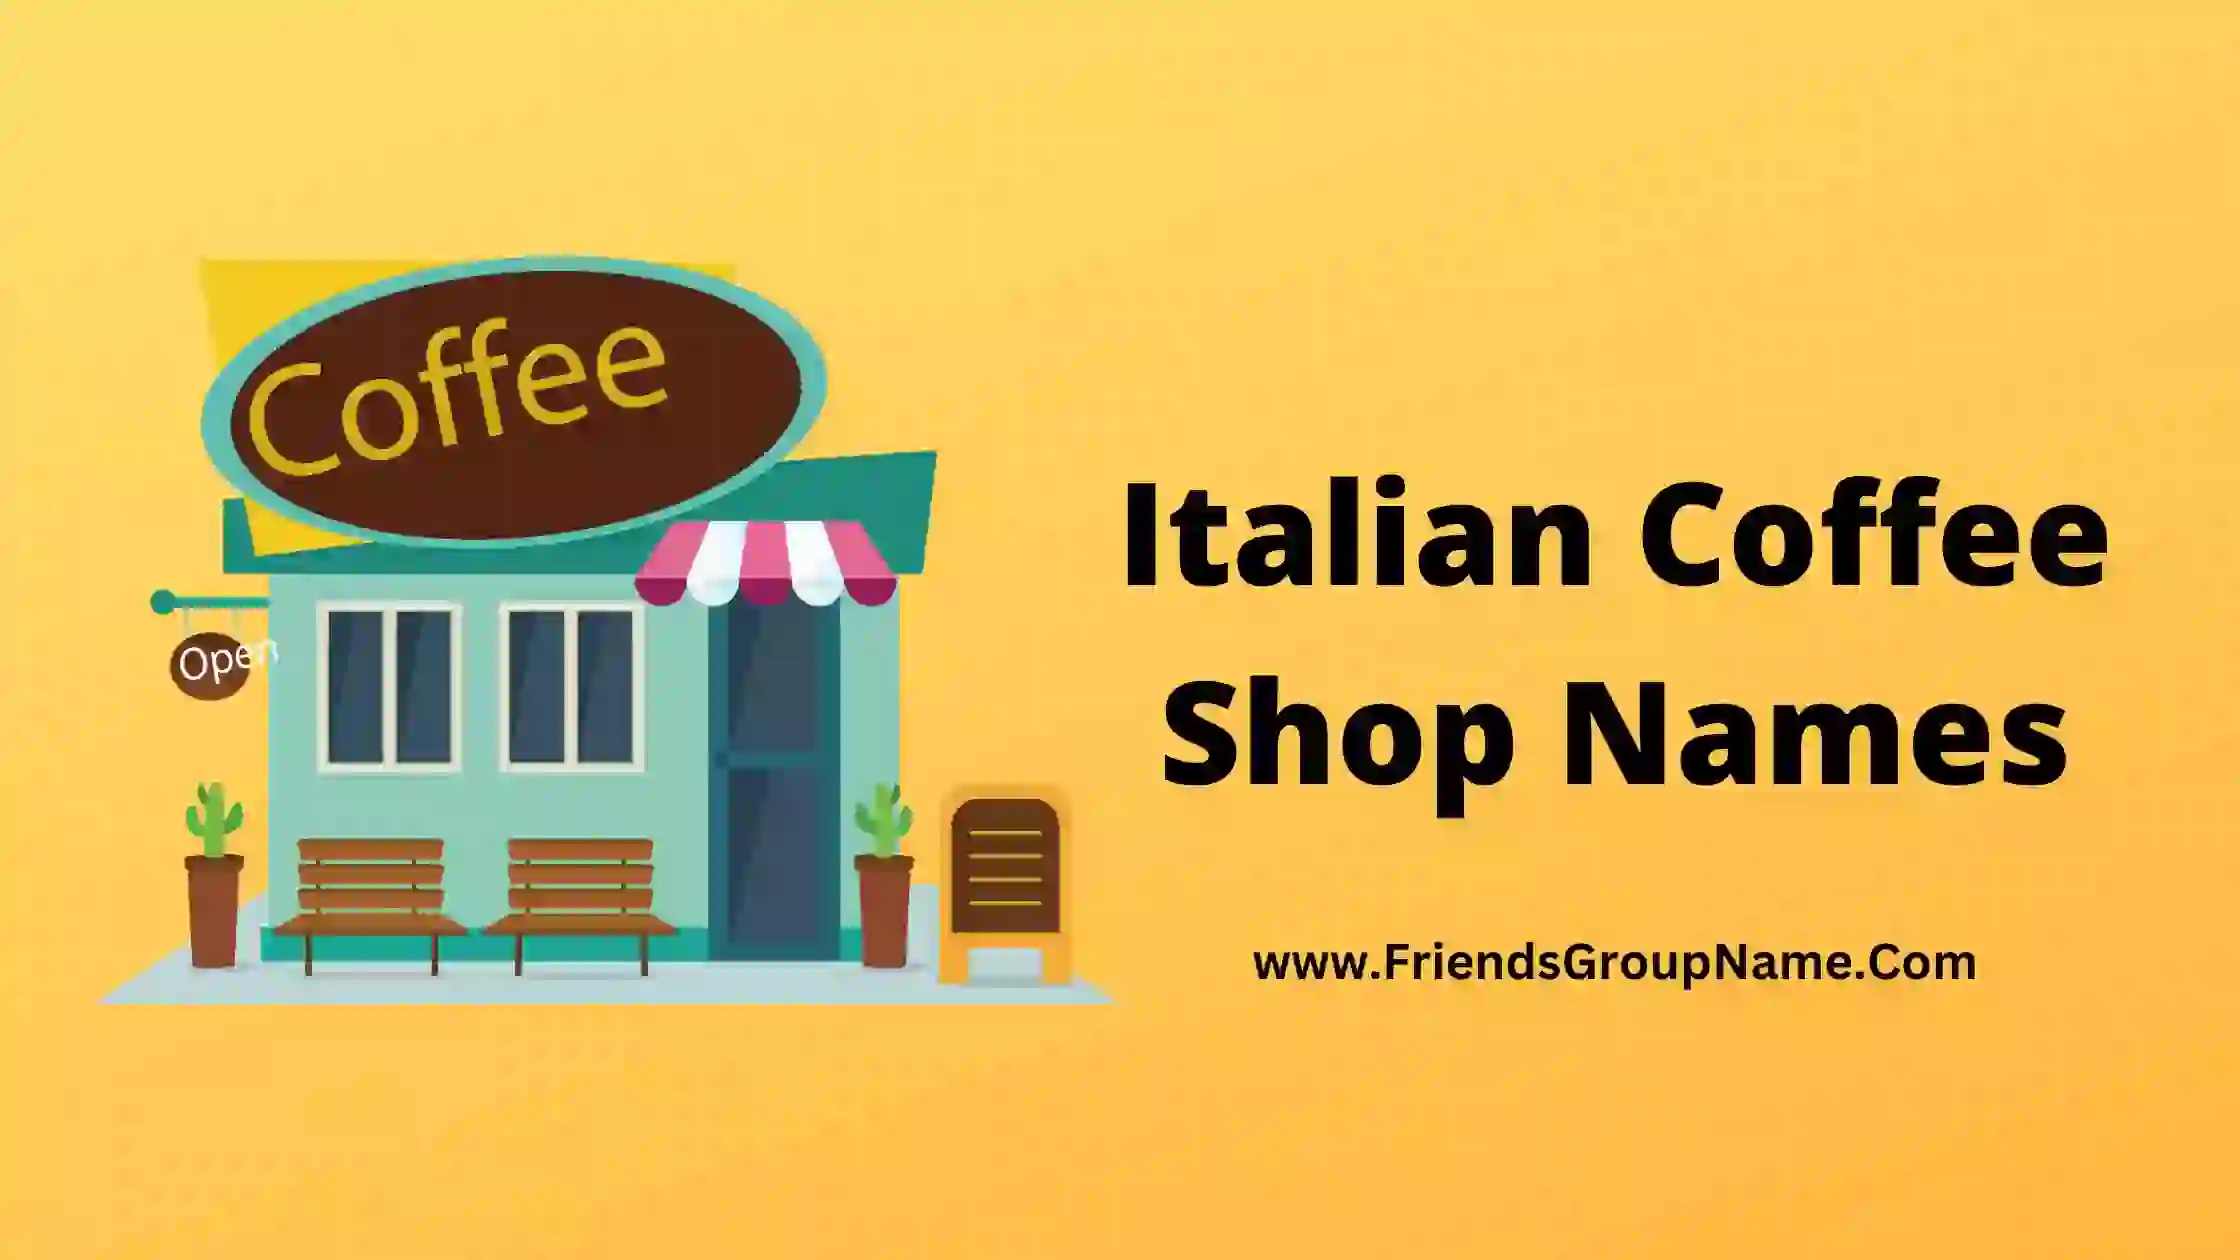 Italian Coffee Shop Names